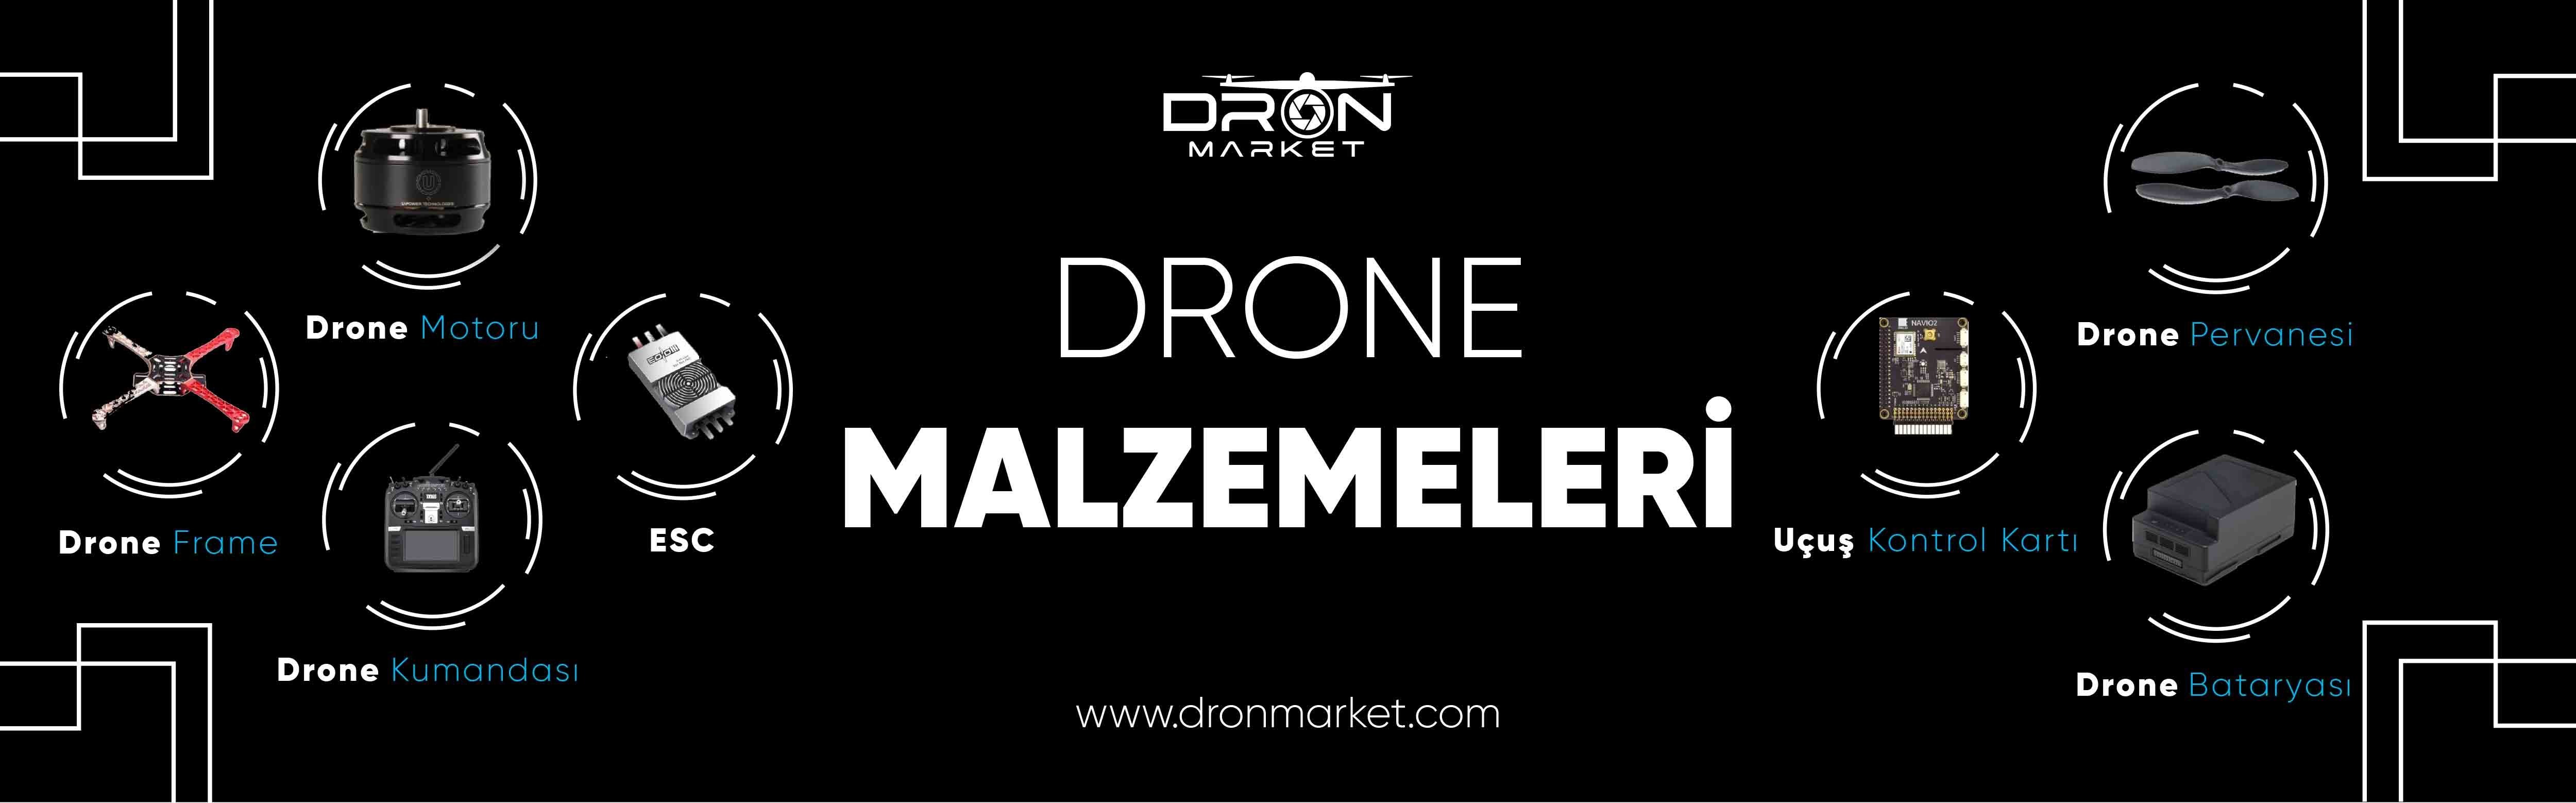 drone supplies at dronmarket.com